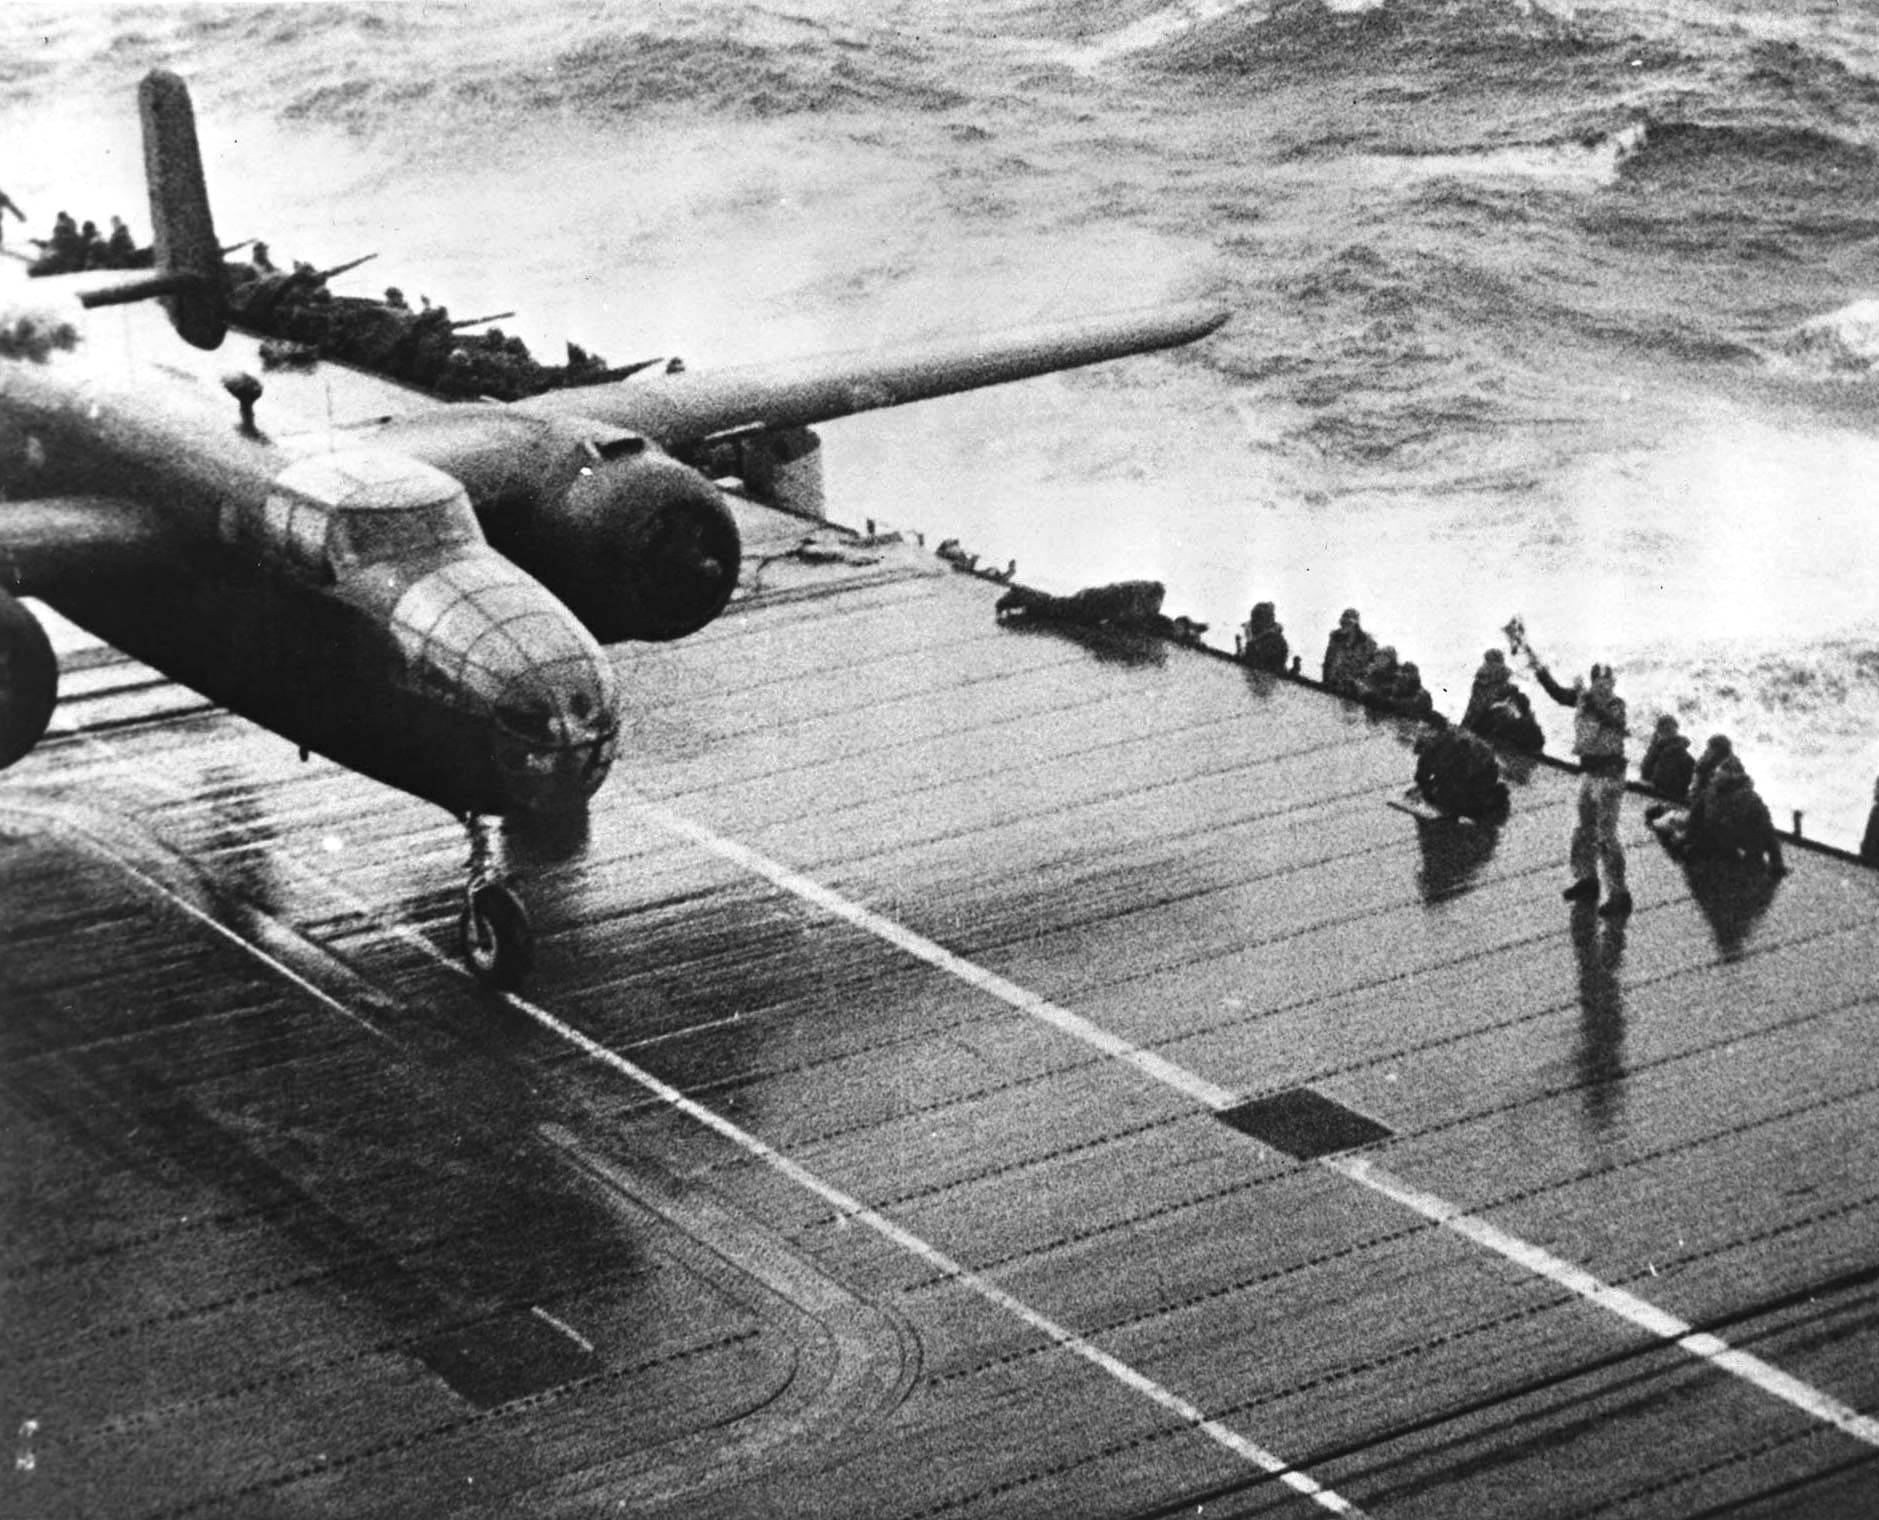 Hornet launching Doolittle raiders, 18 Apr 1942, photo 2 of 10